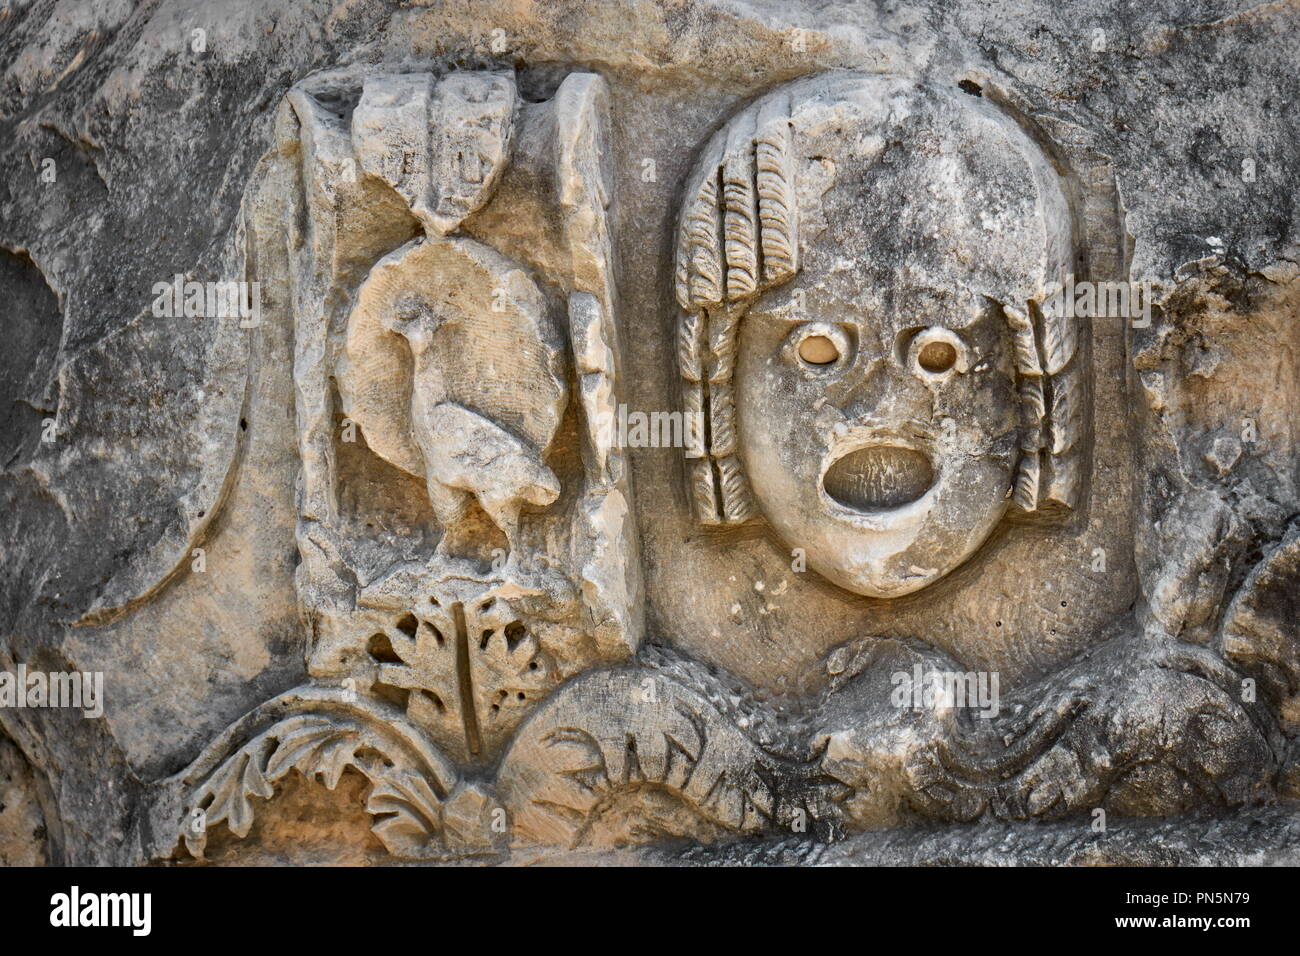 La sculpture de l'ancien masque de théâtre, Myra (Demre), Turquie Banque D'Images